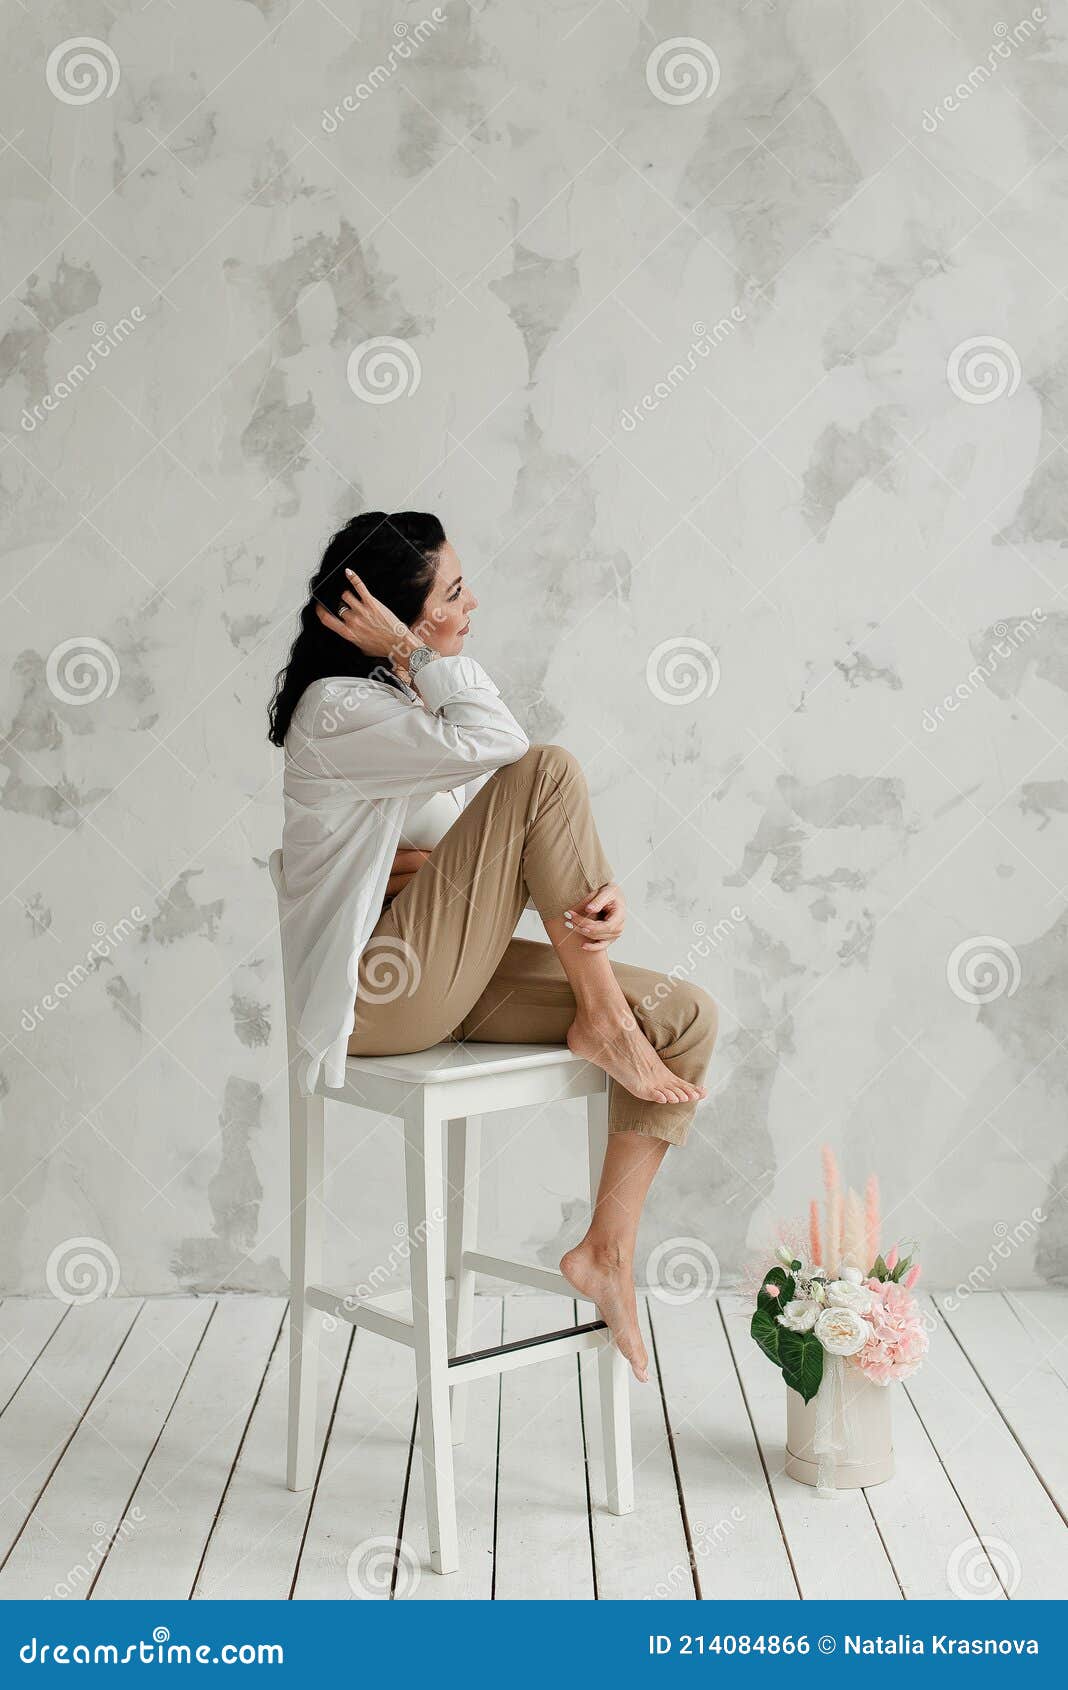 Girl Sitting on Giant Chair Stock Image - Image of barefeet